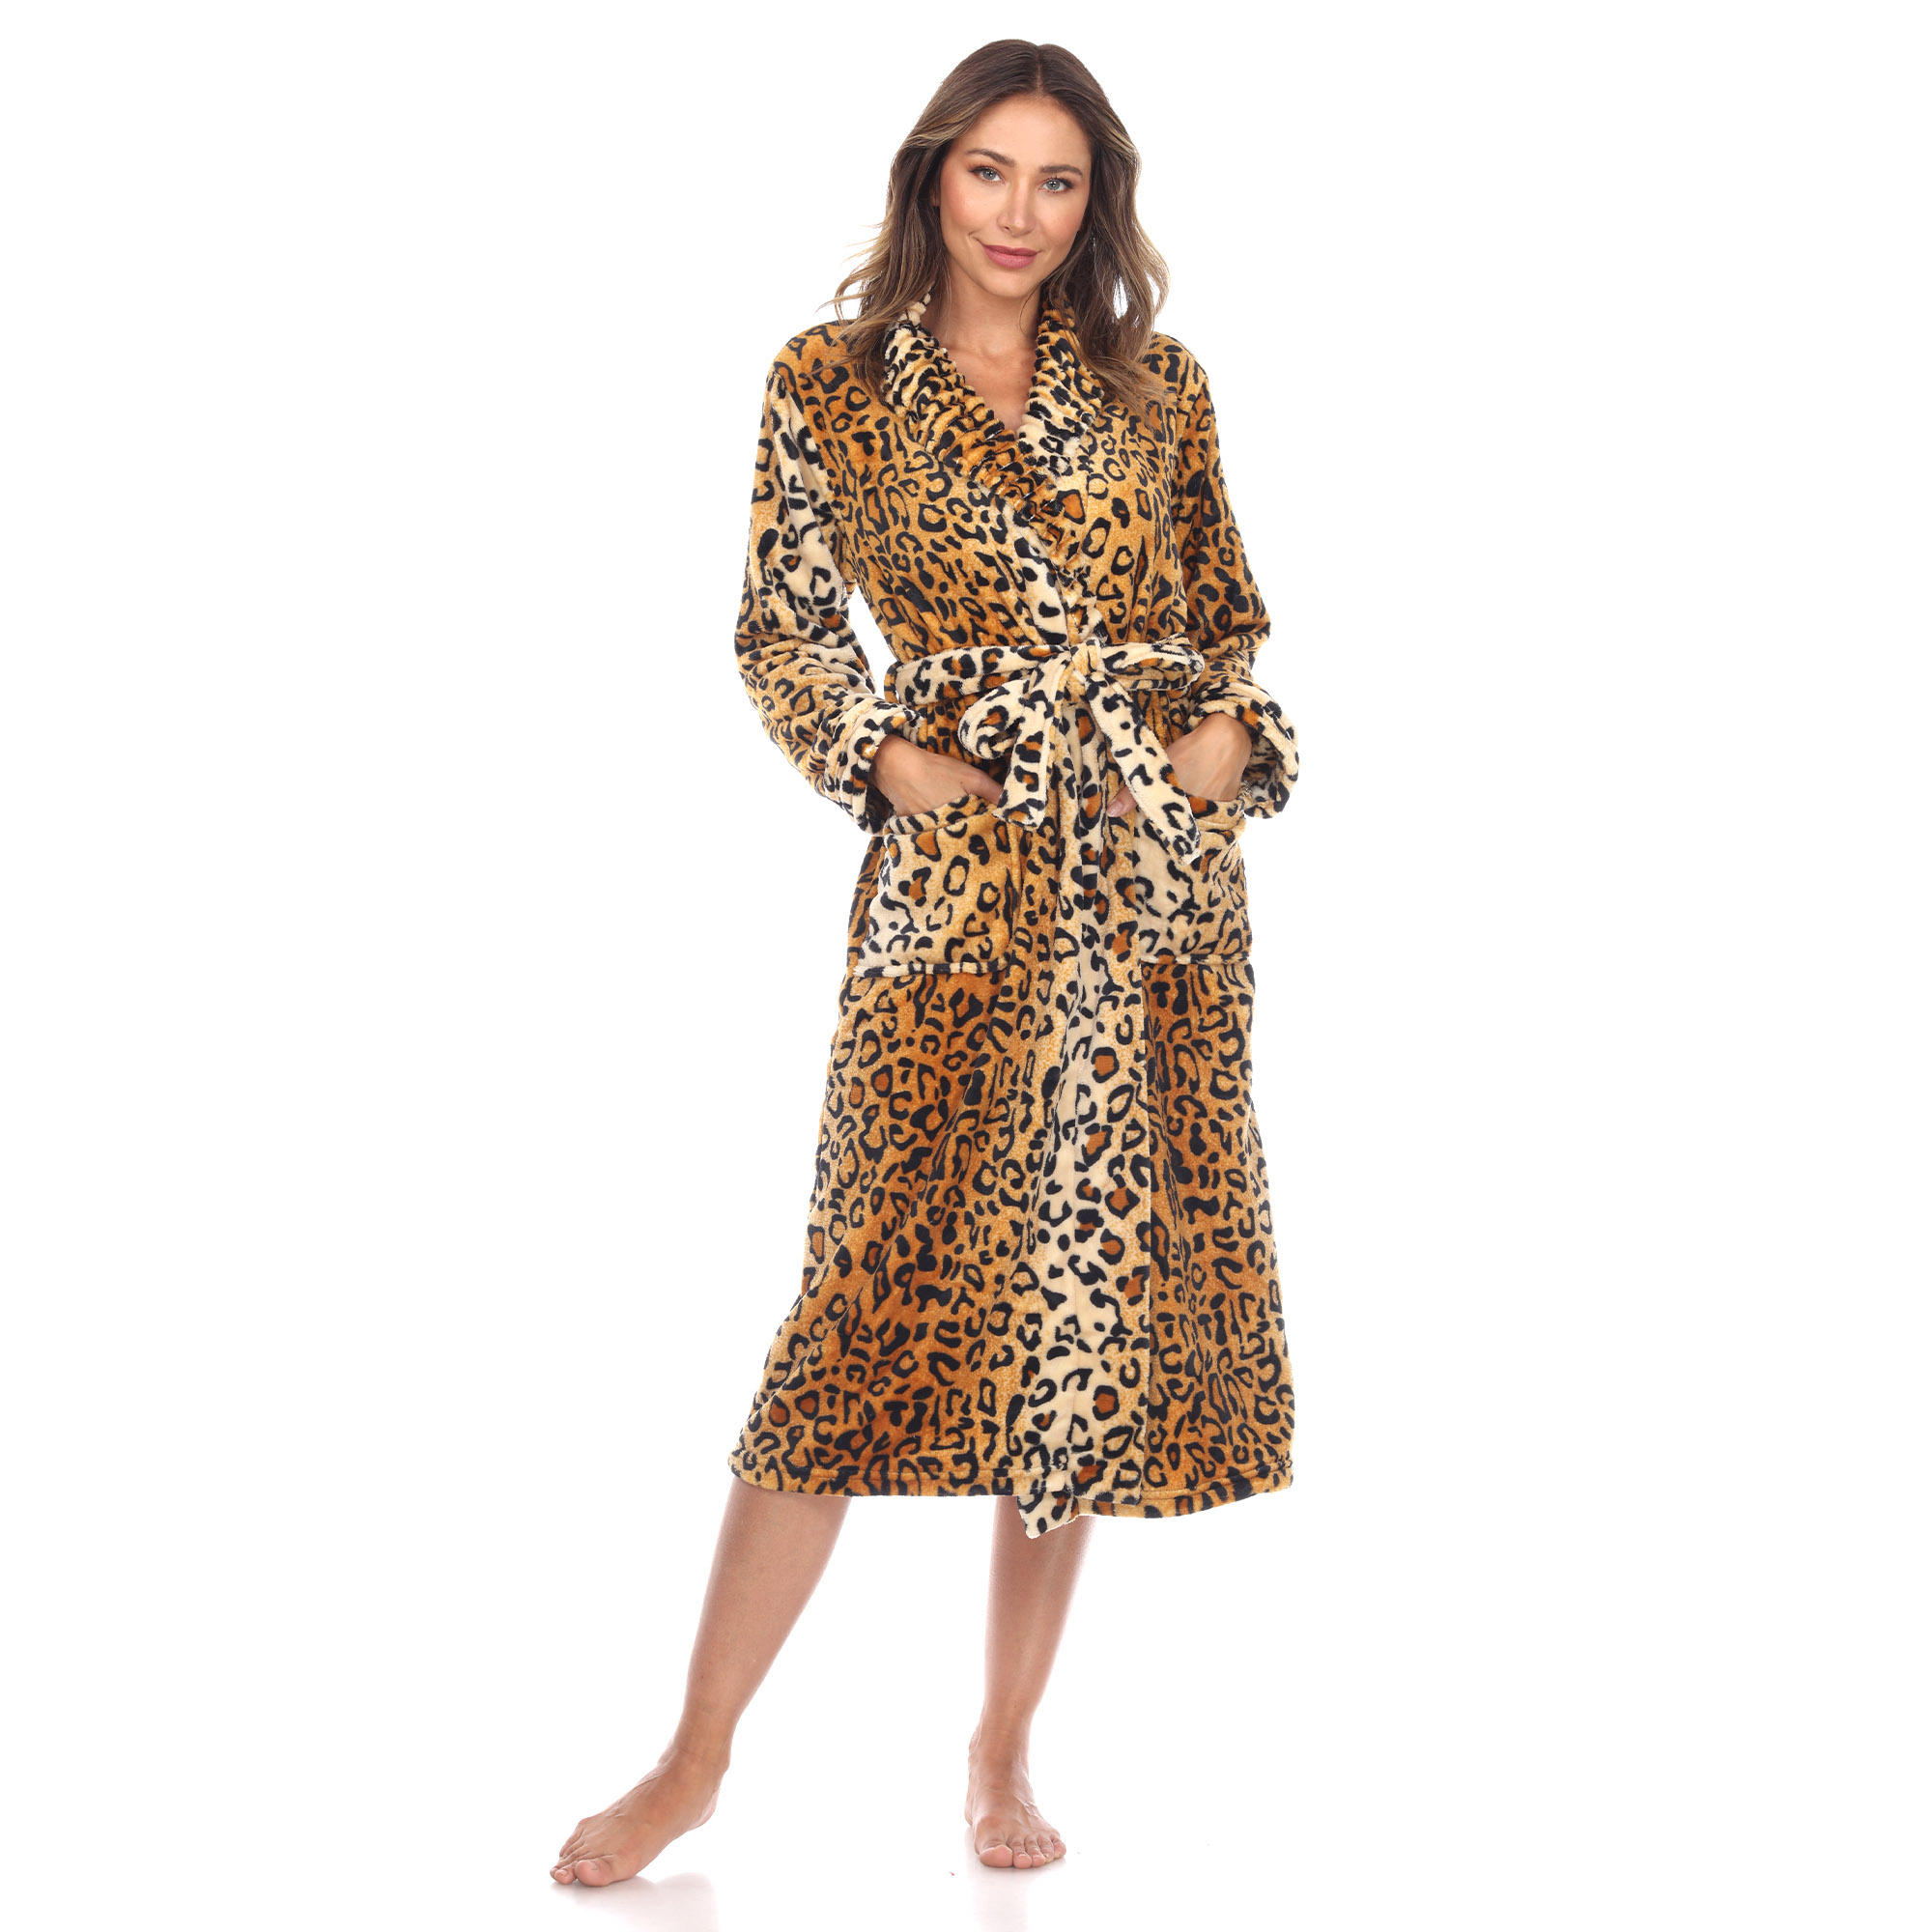 White Mark Women's Cozy Lounge Robe - Brown Leopard, 2X/3X